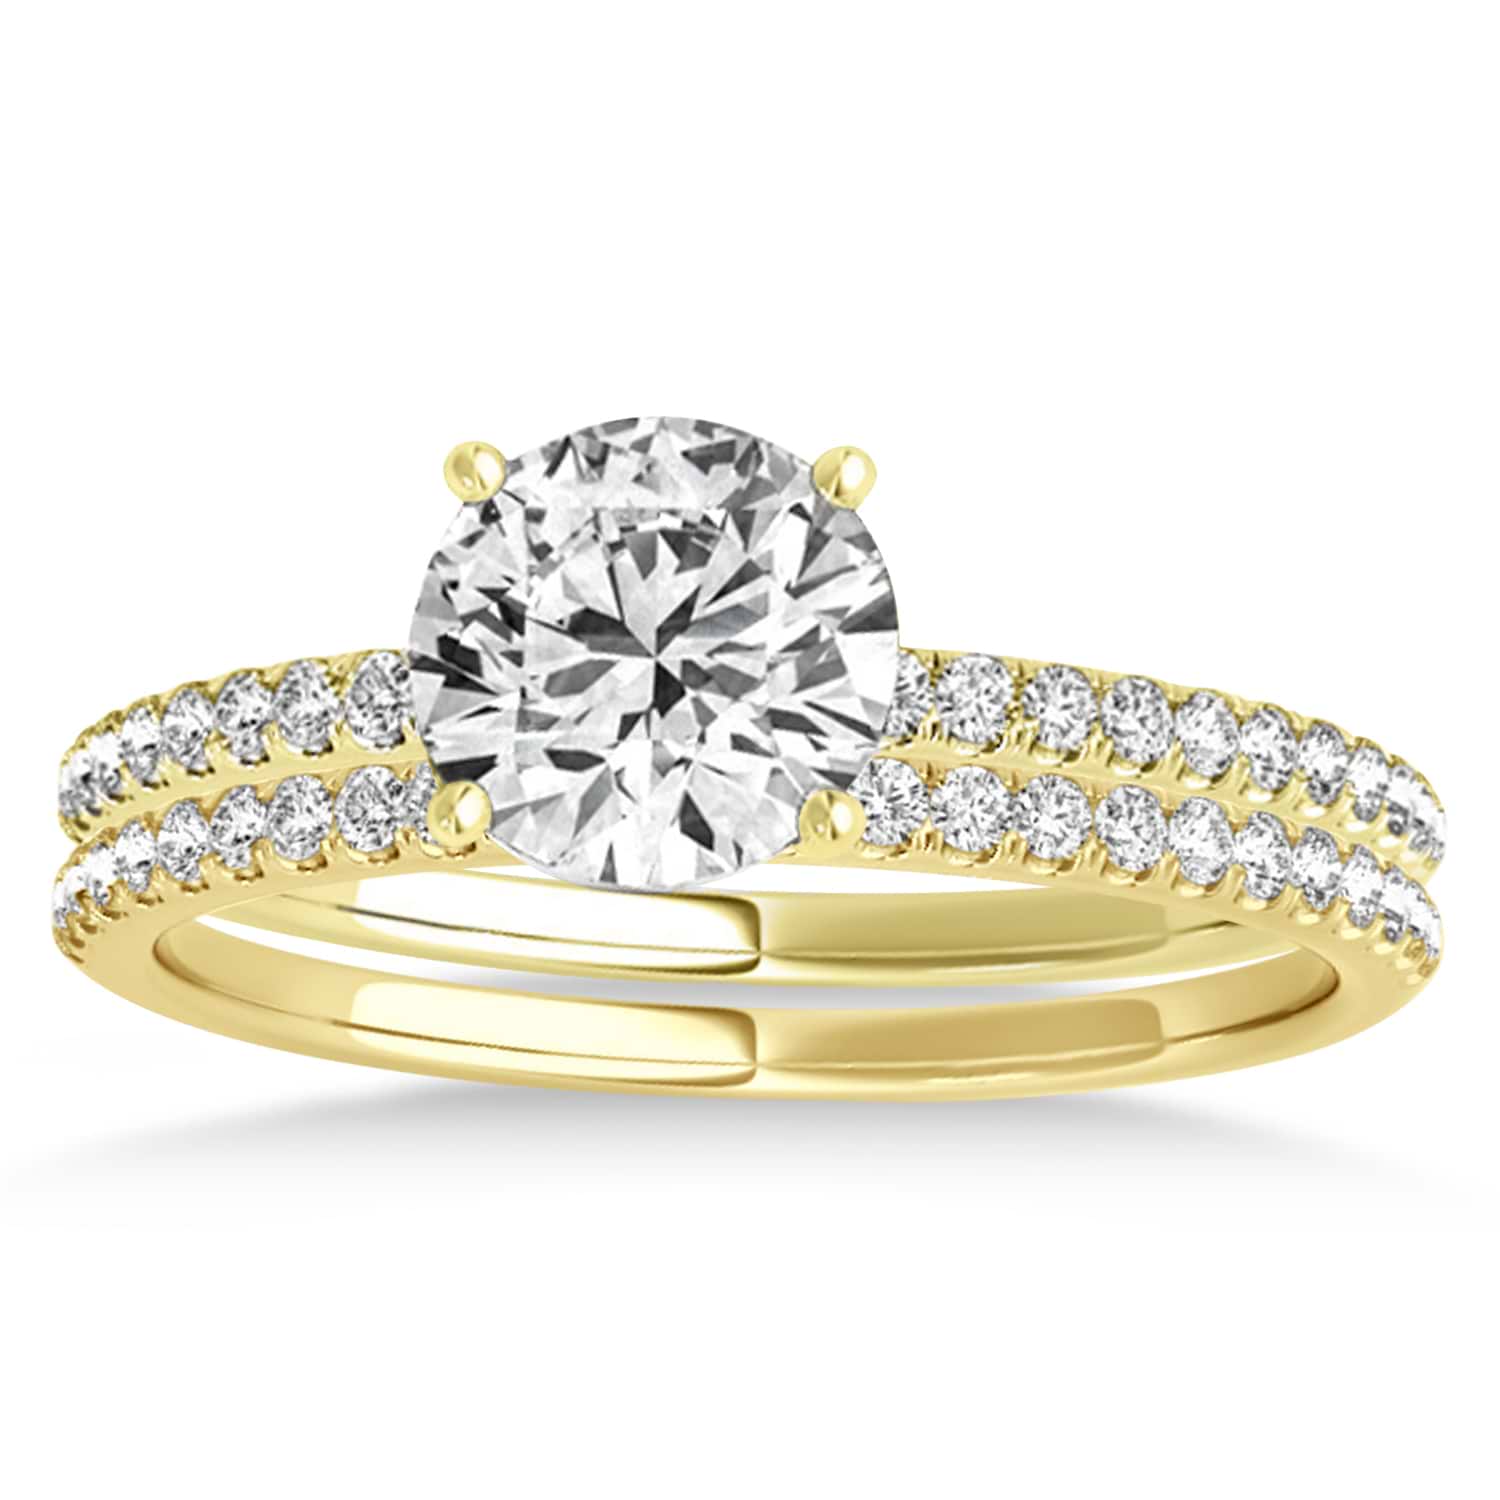 Diamond Accented Bridal Set Setting 18k Yellow Gold (0.25ct)